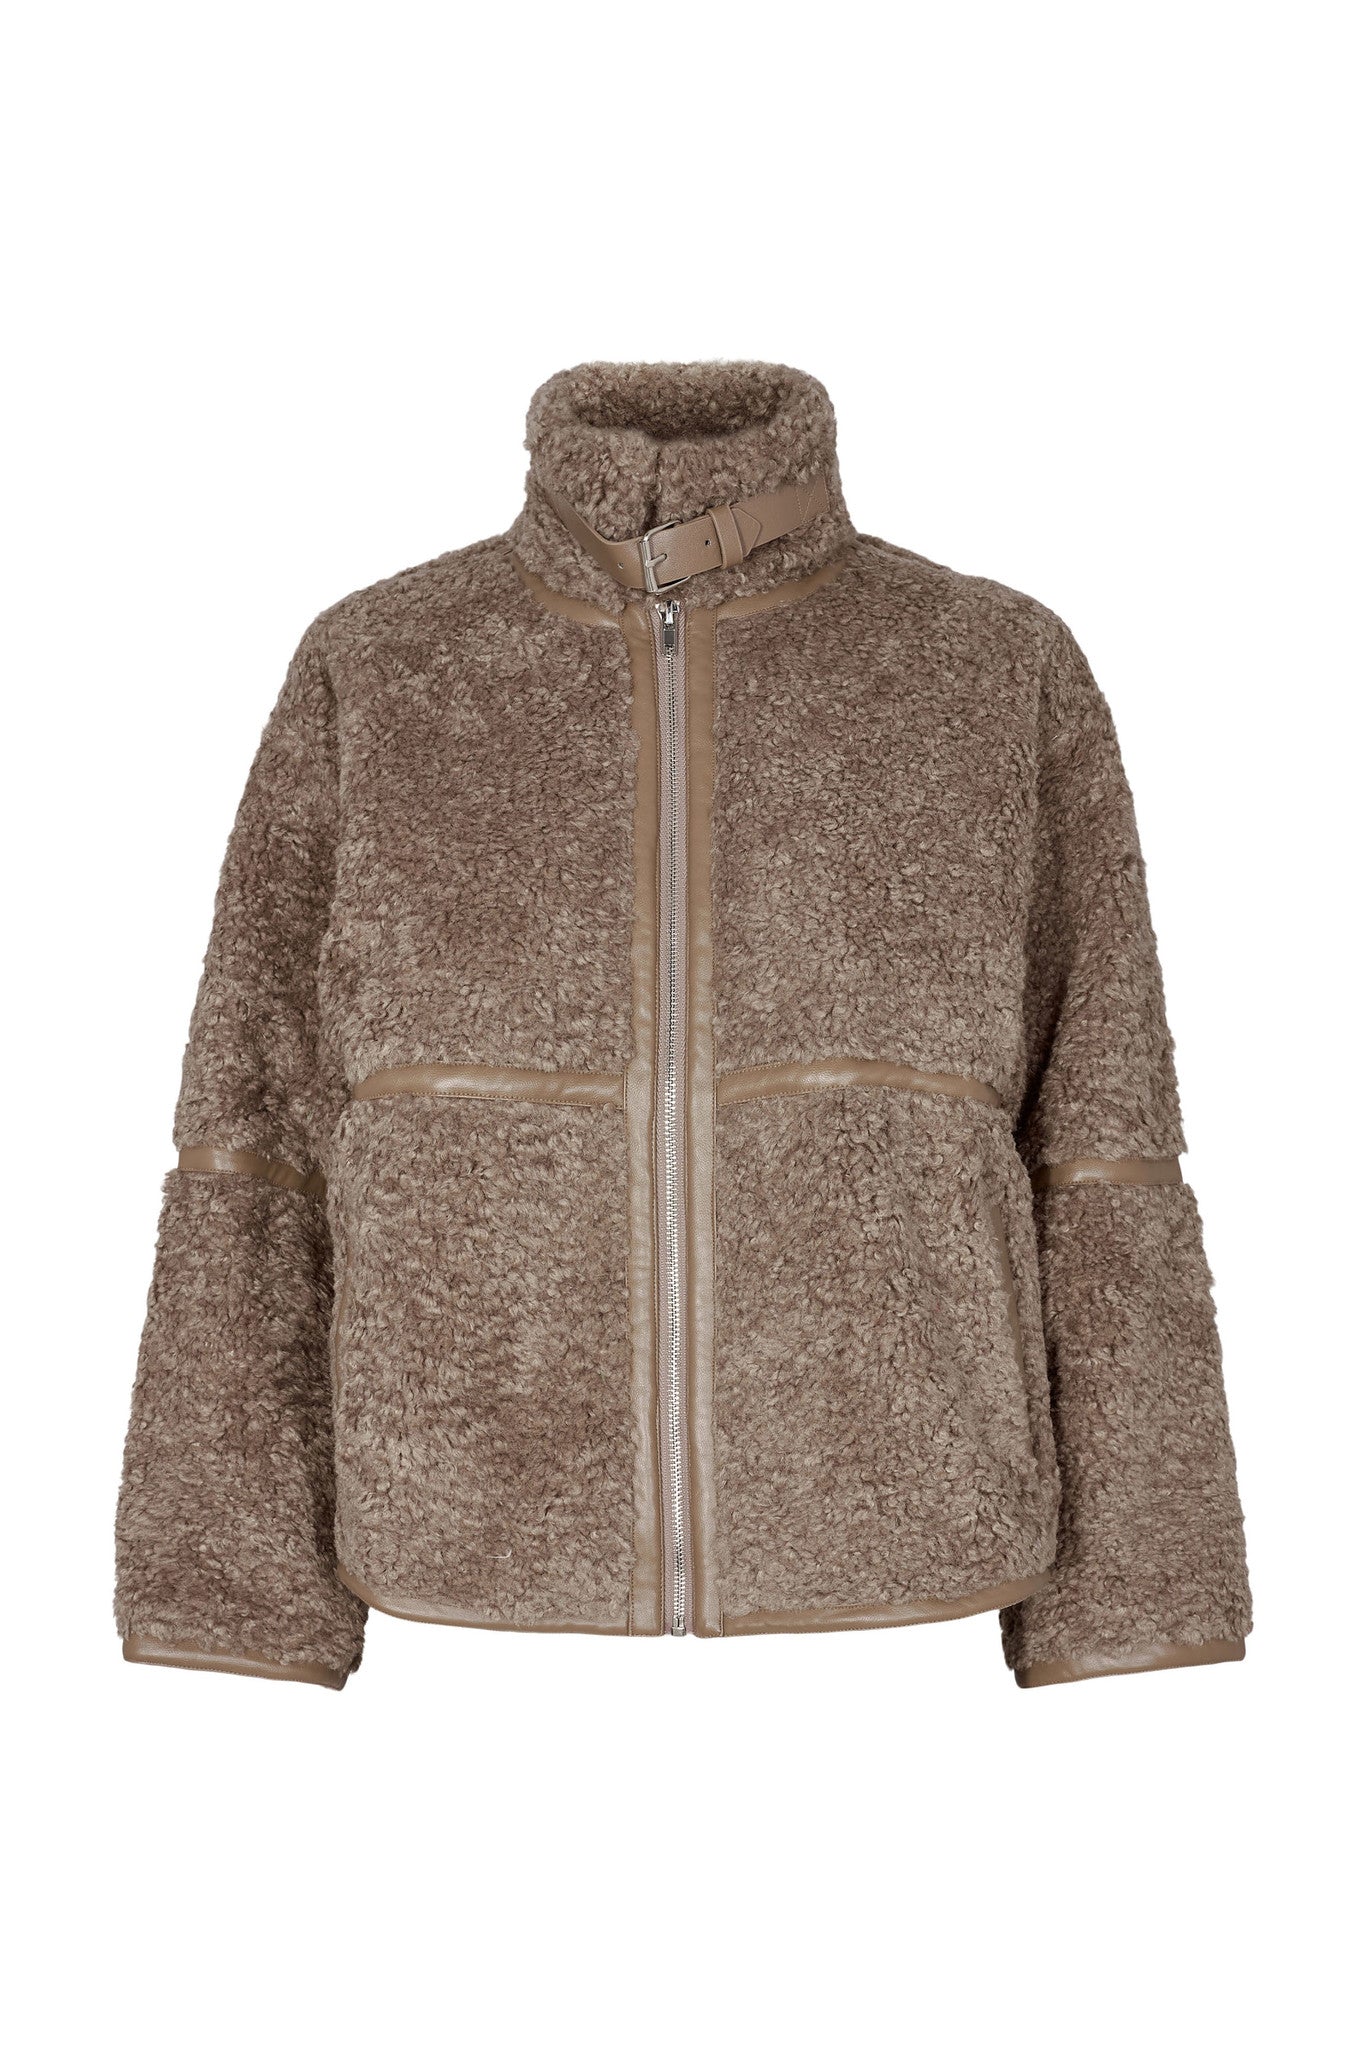 Co&#8217;Couture Abel Fur Jacket &#8211; Walnut